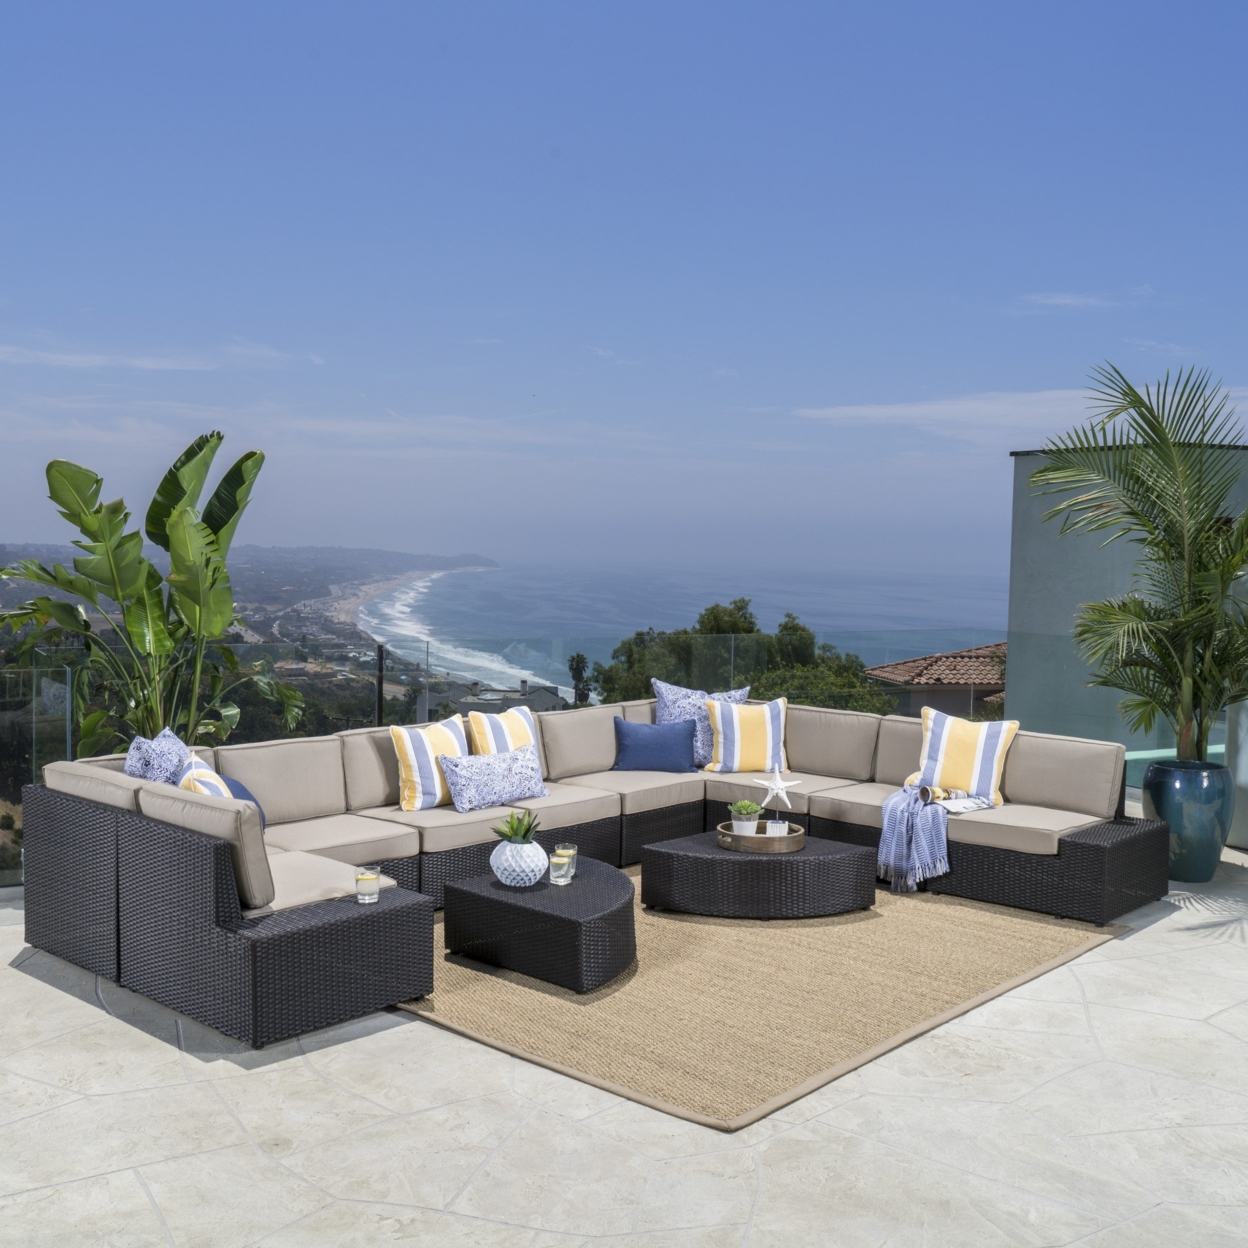 Reddington 12pc Outdoor Wicker Sectional Sofa Set With Cushions - Gray